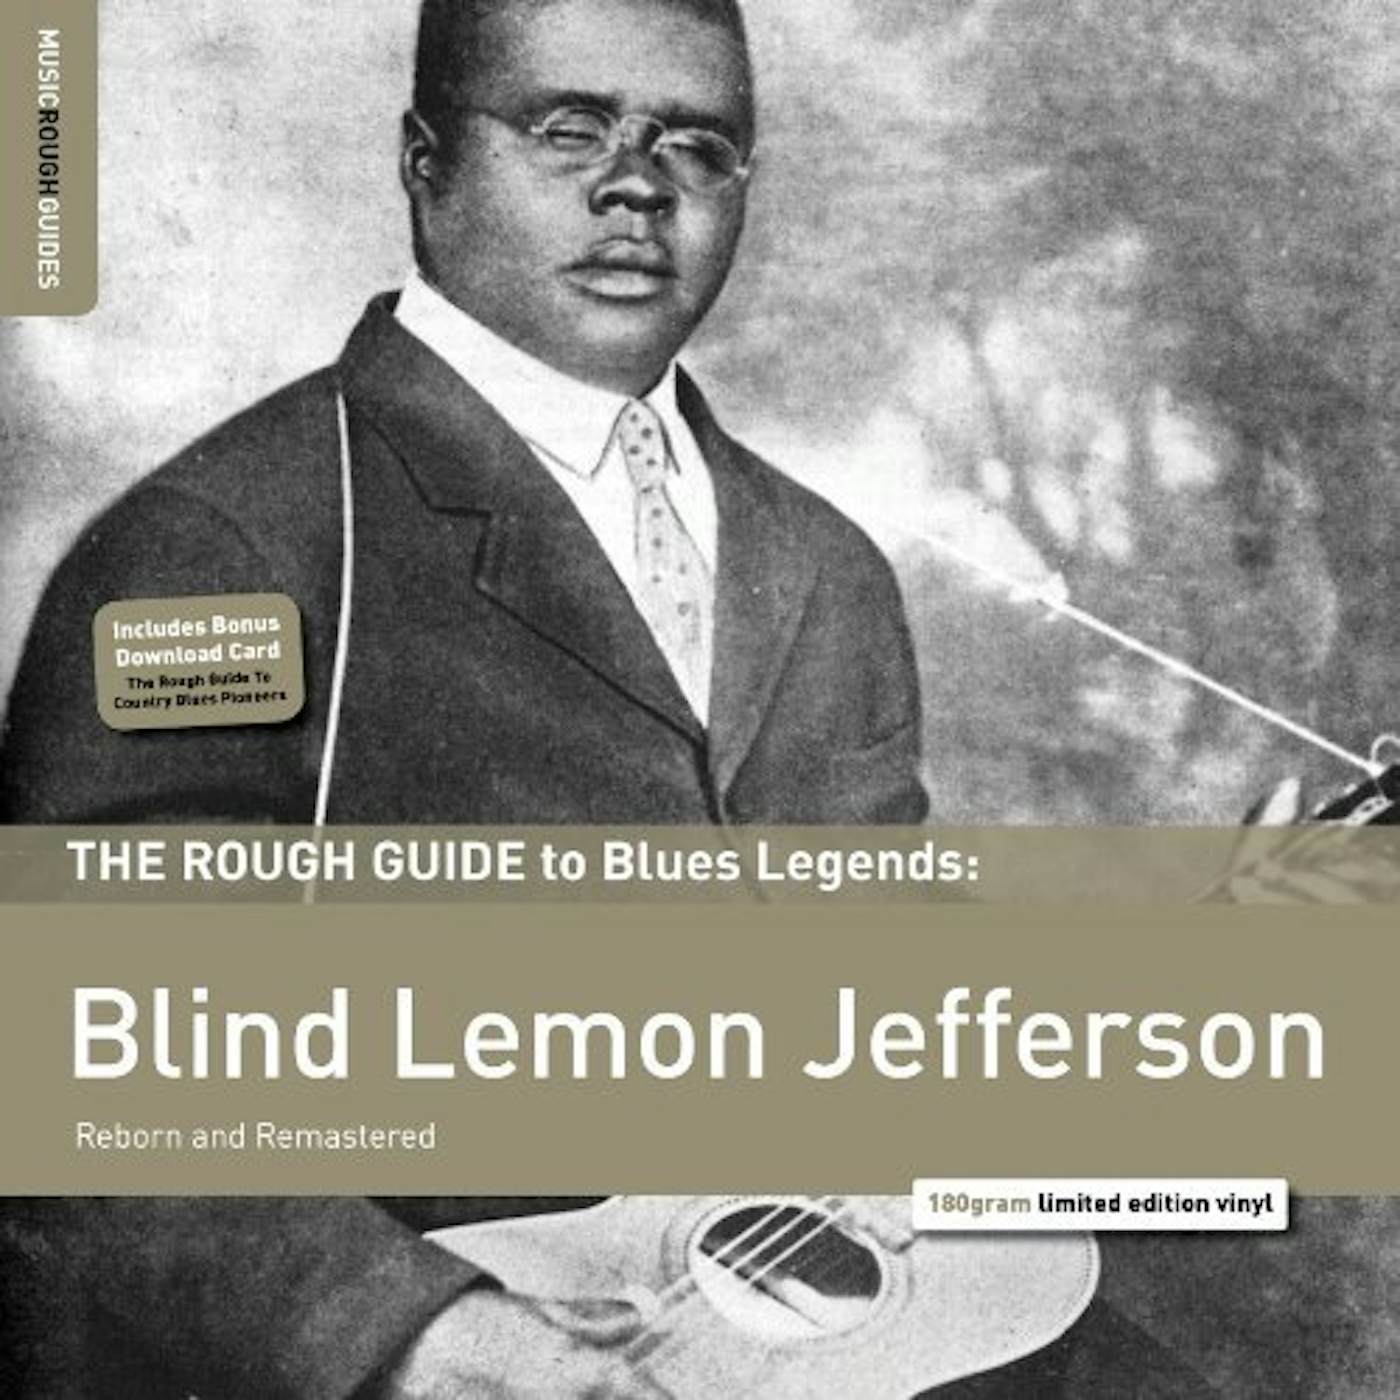 Rough Guide To Blind Lemon Jefferson Vinyl Record